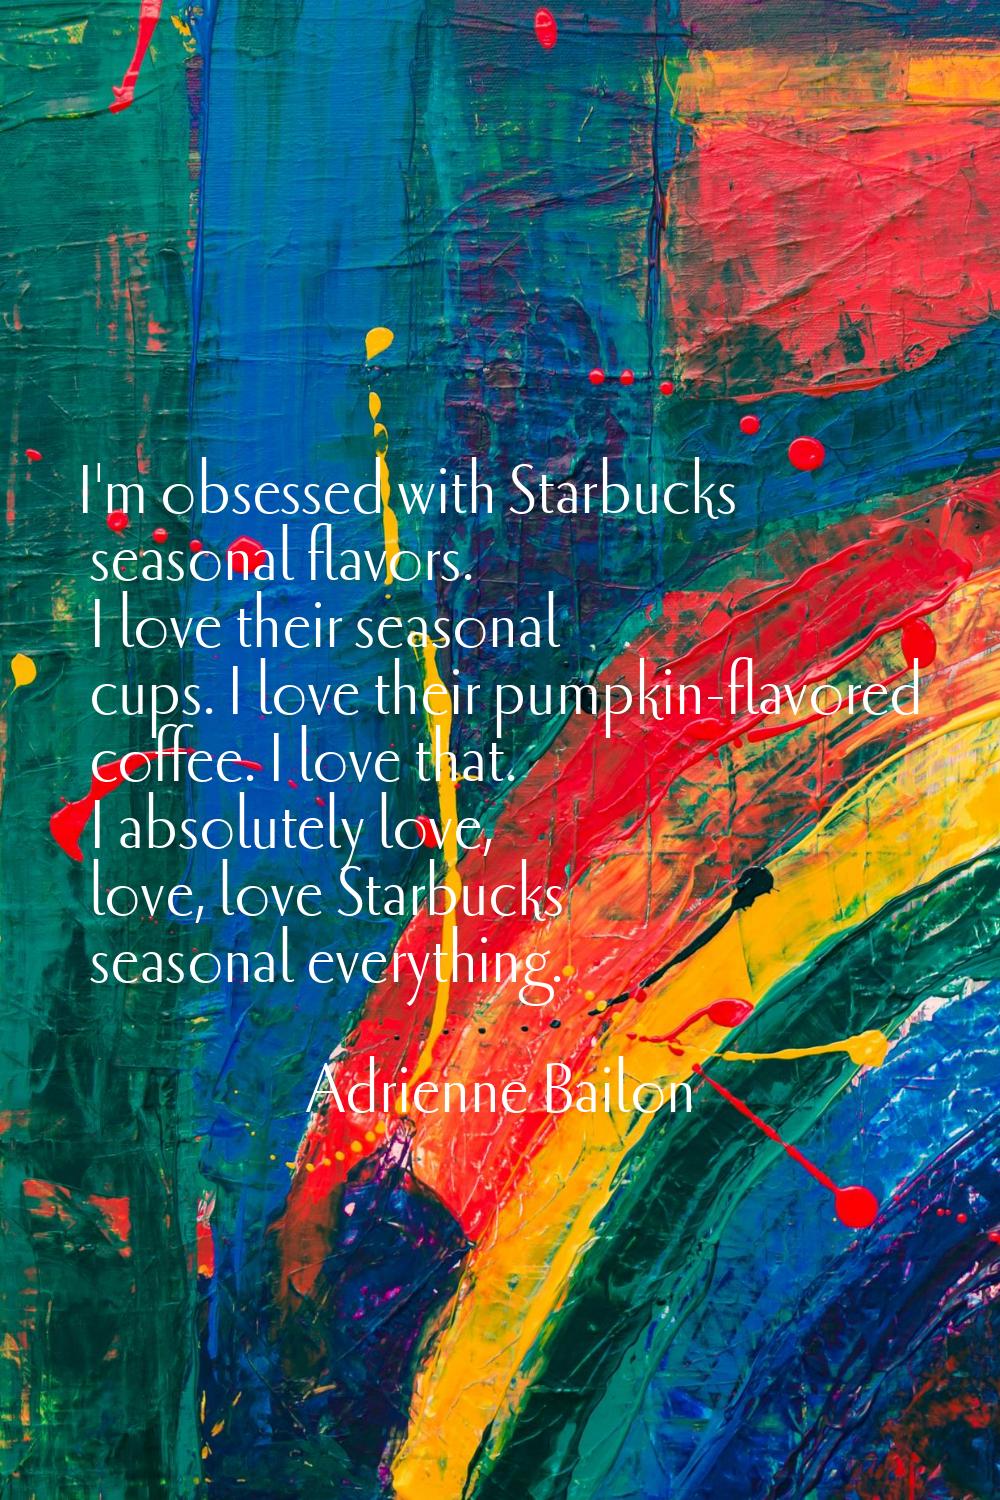 I'm obsessed with Starbucks seasonal flavors. I love their seasonal cups. I love their pumpkin-flav